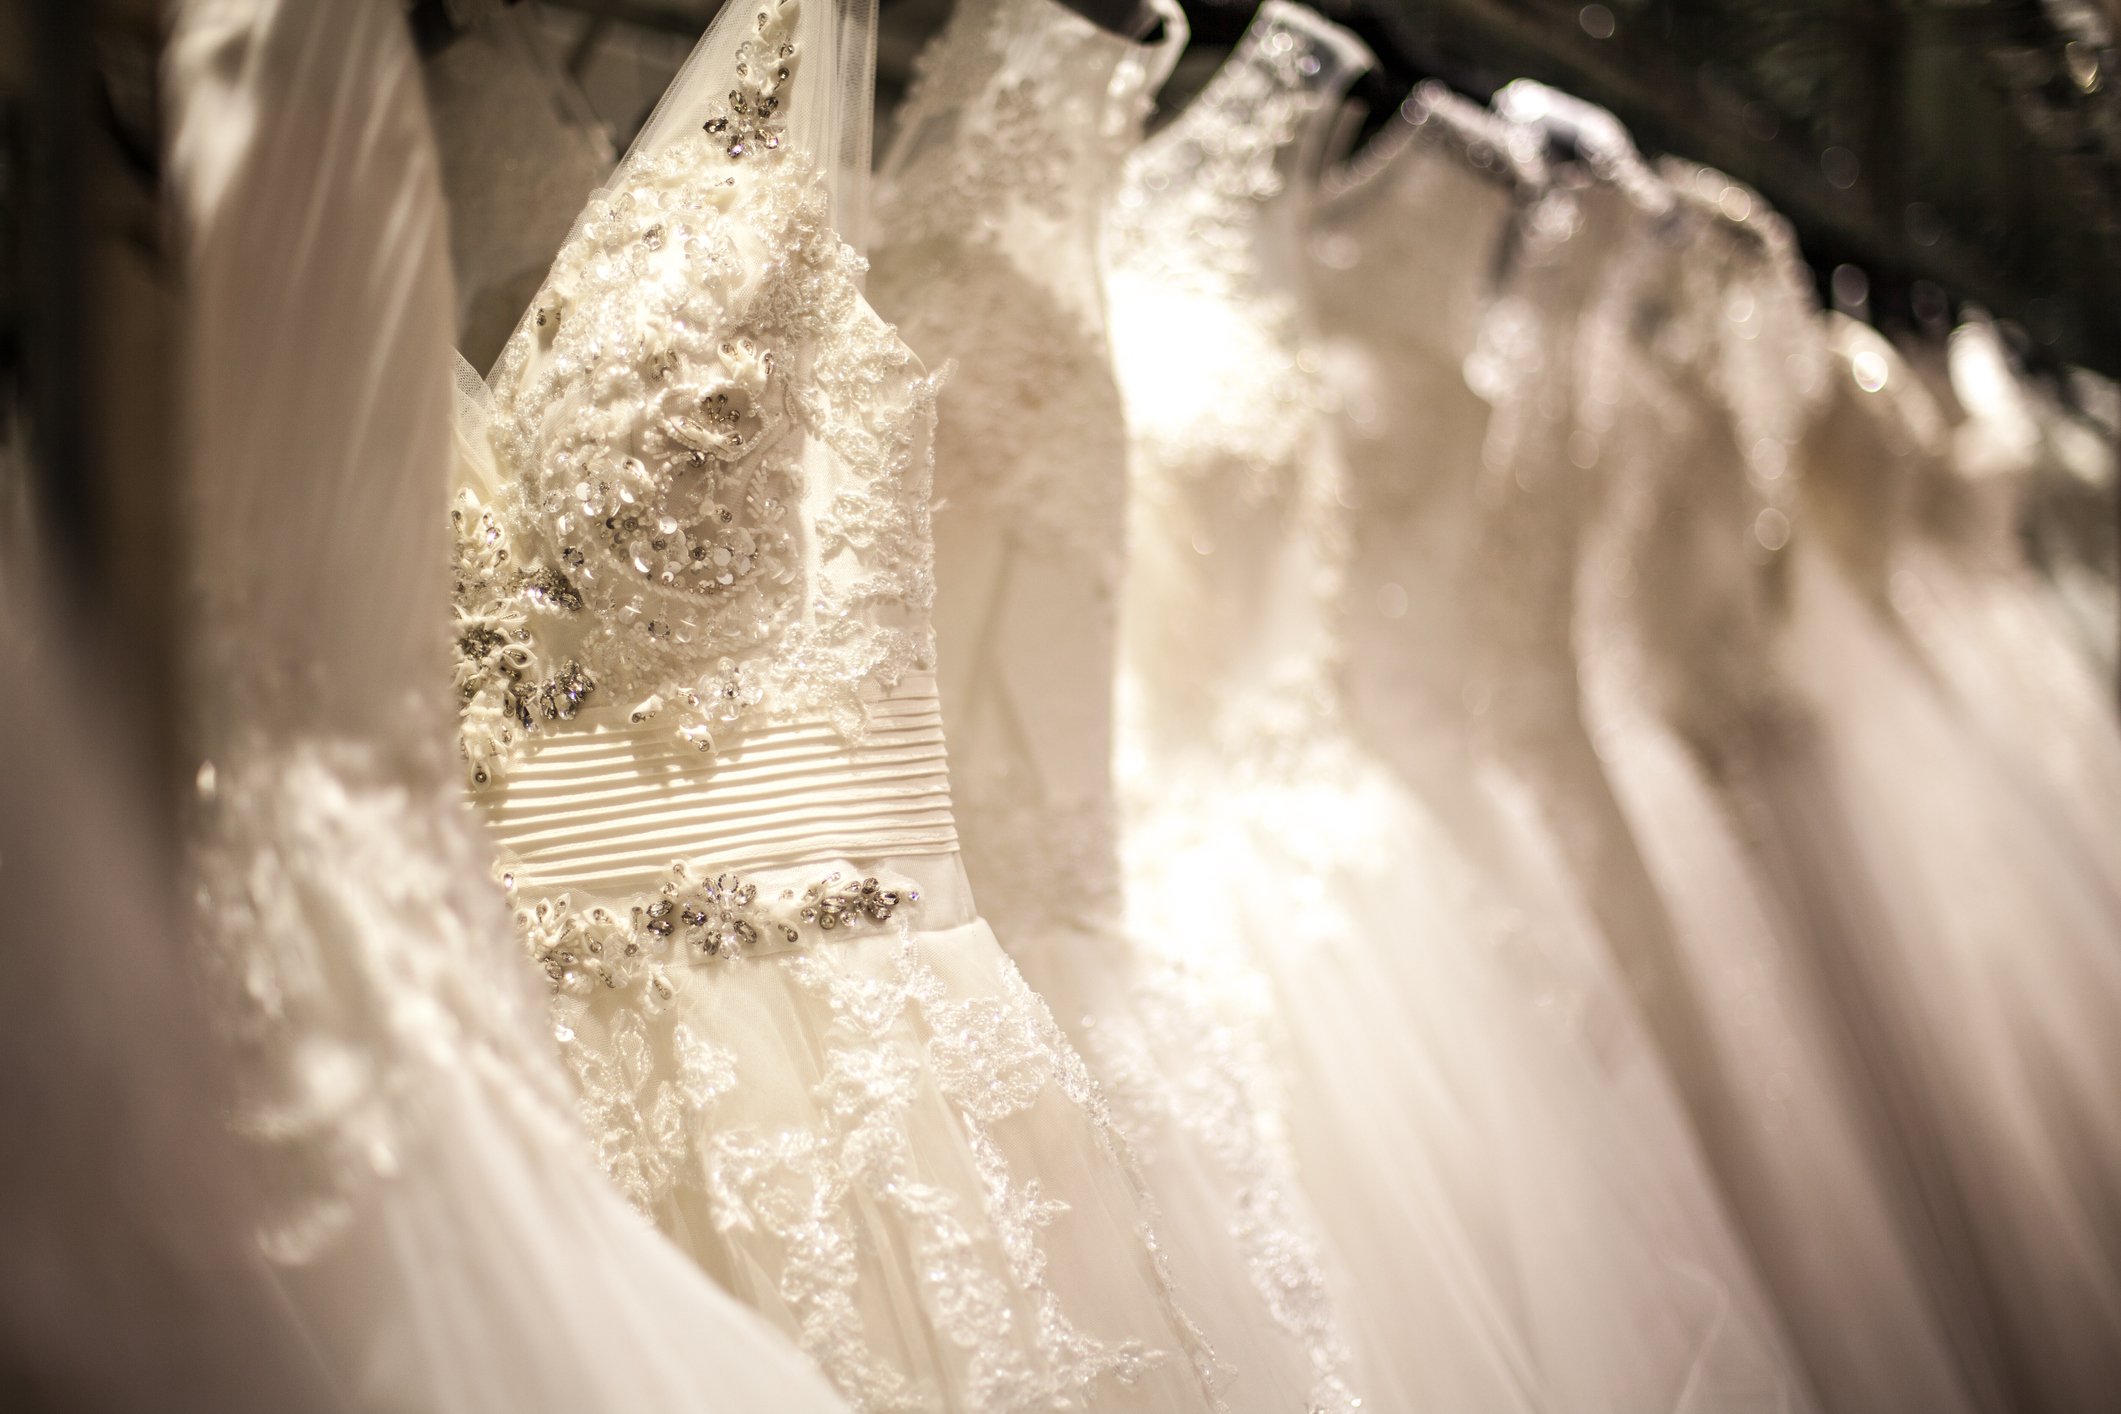 wedding dresses on hangers 